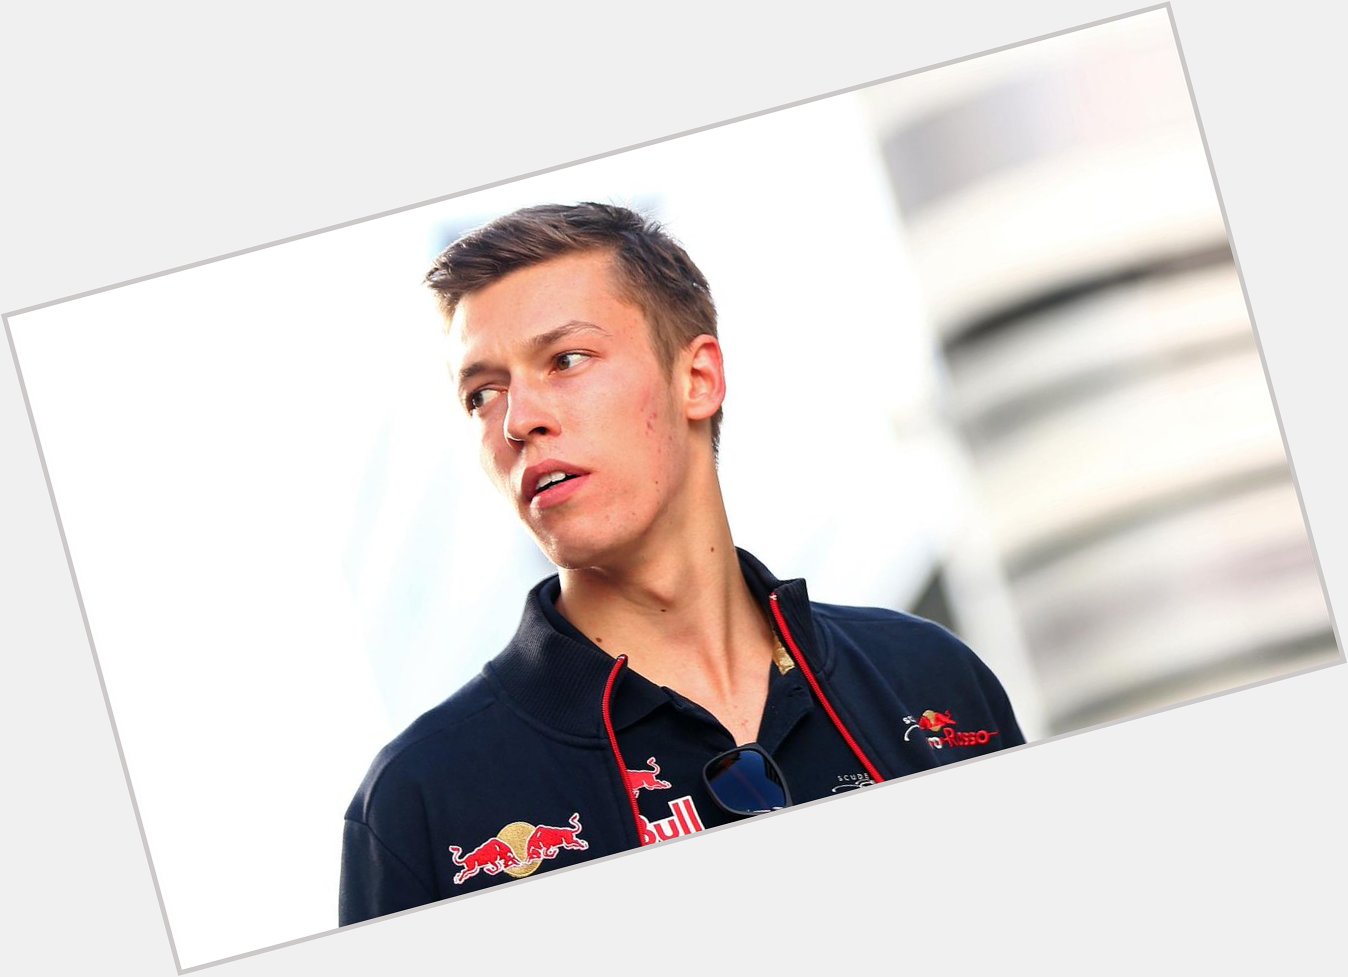  happy birthday Red Bull driver Daniil Kvyat - he is 21 years of age today - good luck always... 